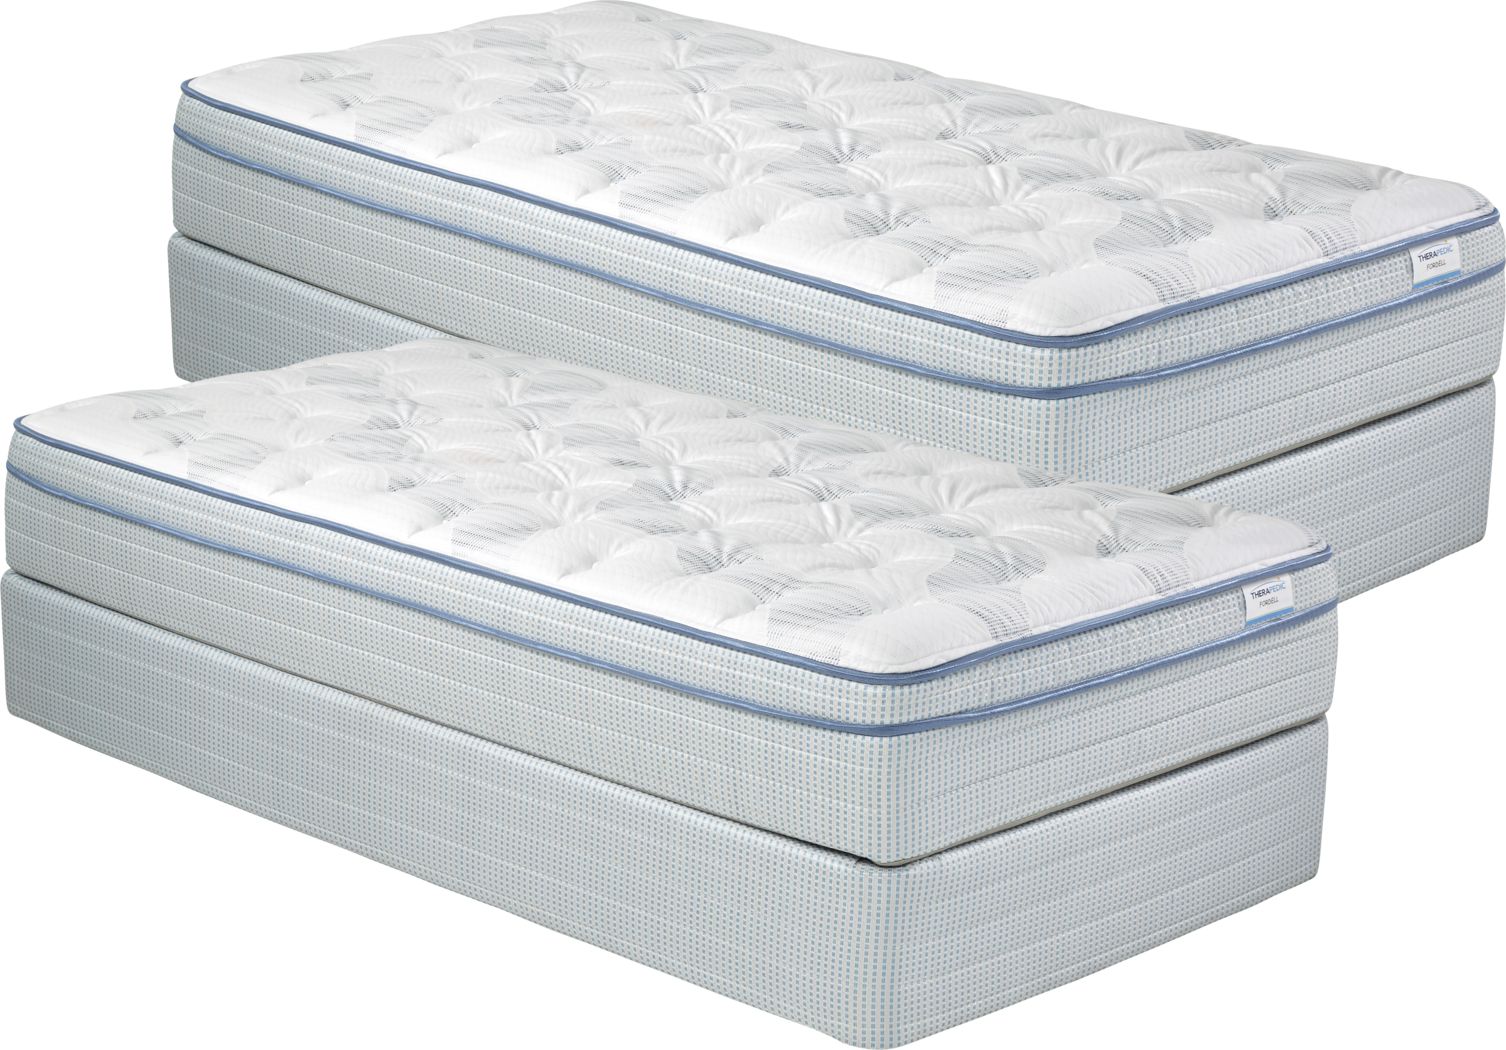 twin mattress set under 200